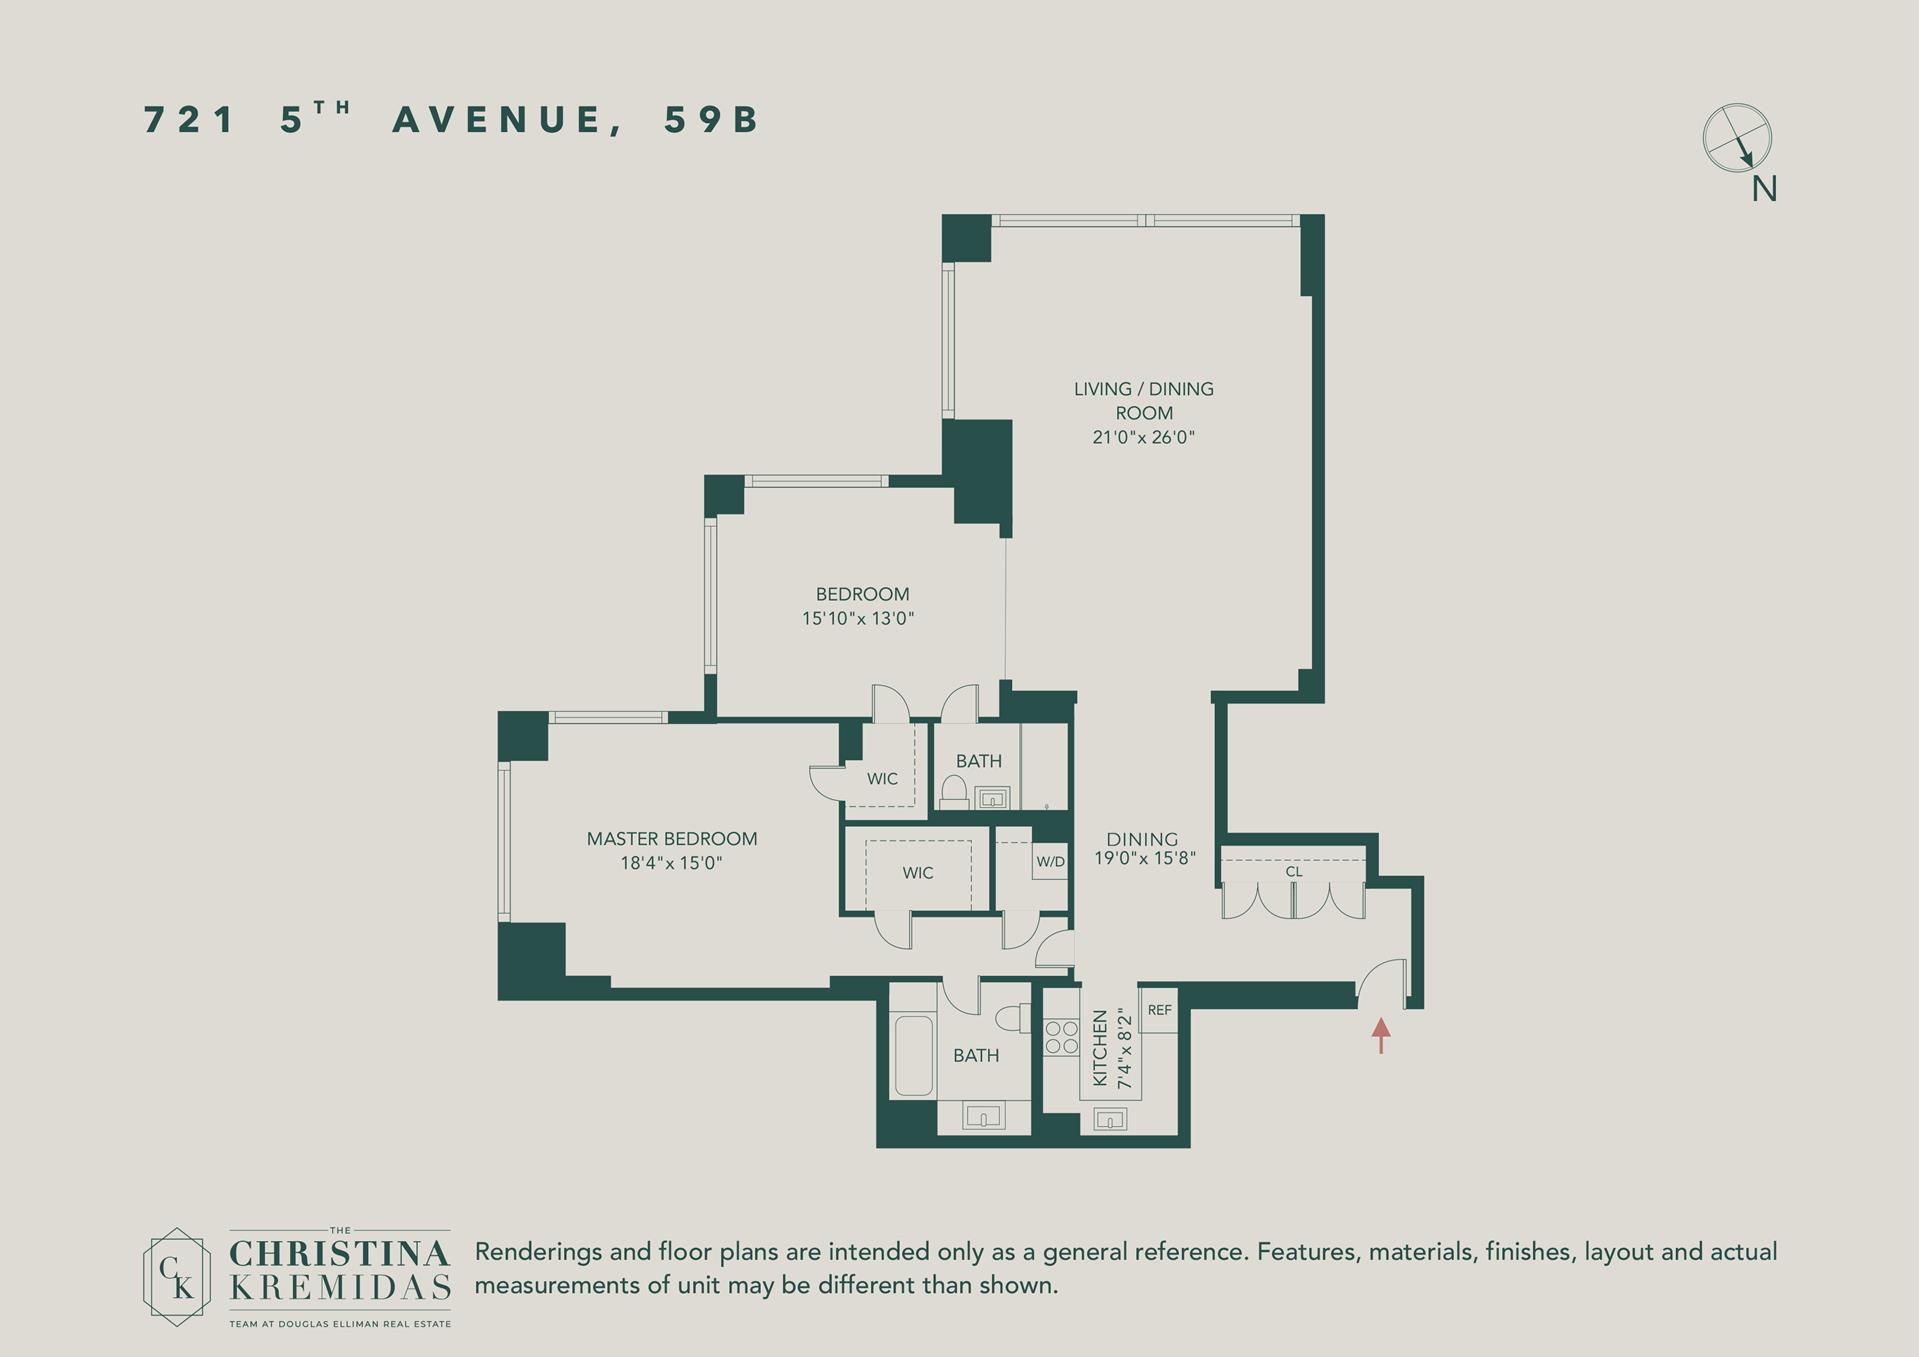 Floorplan for 721 5th Avenue, 59B